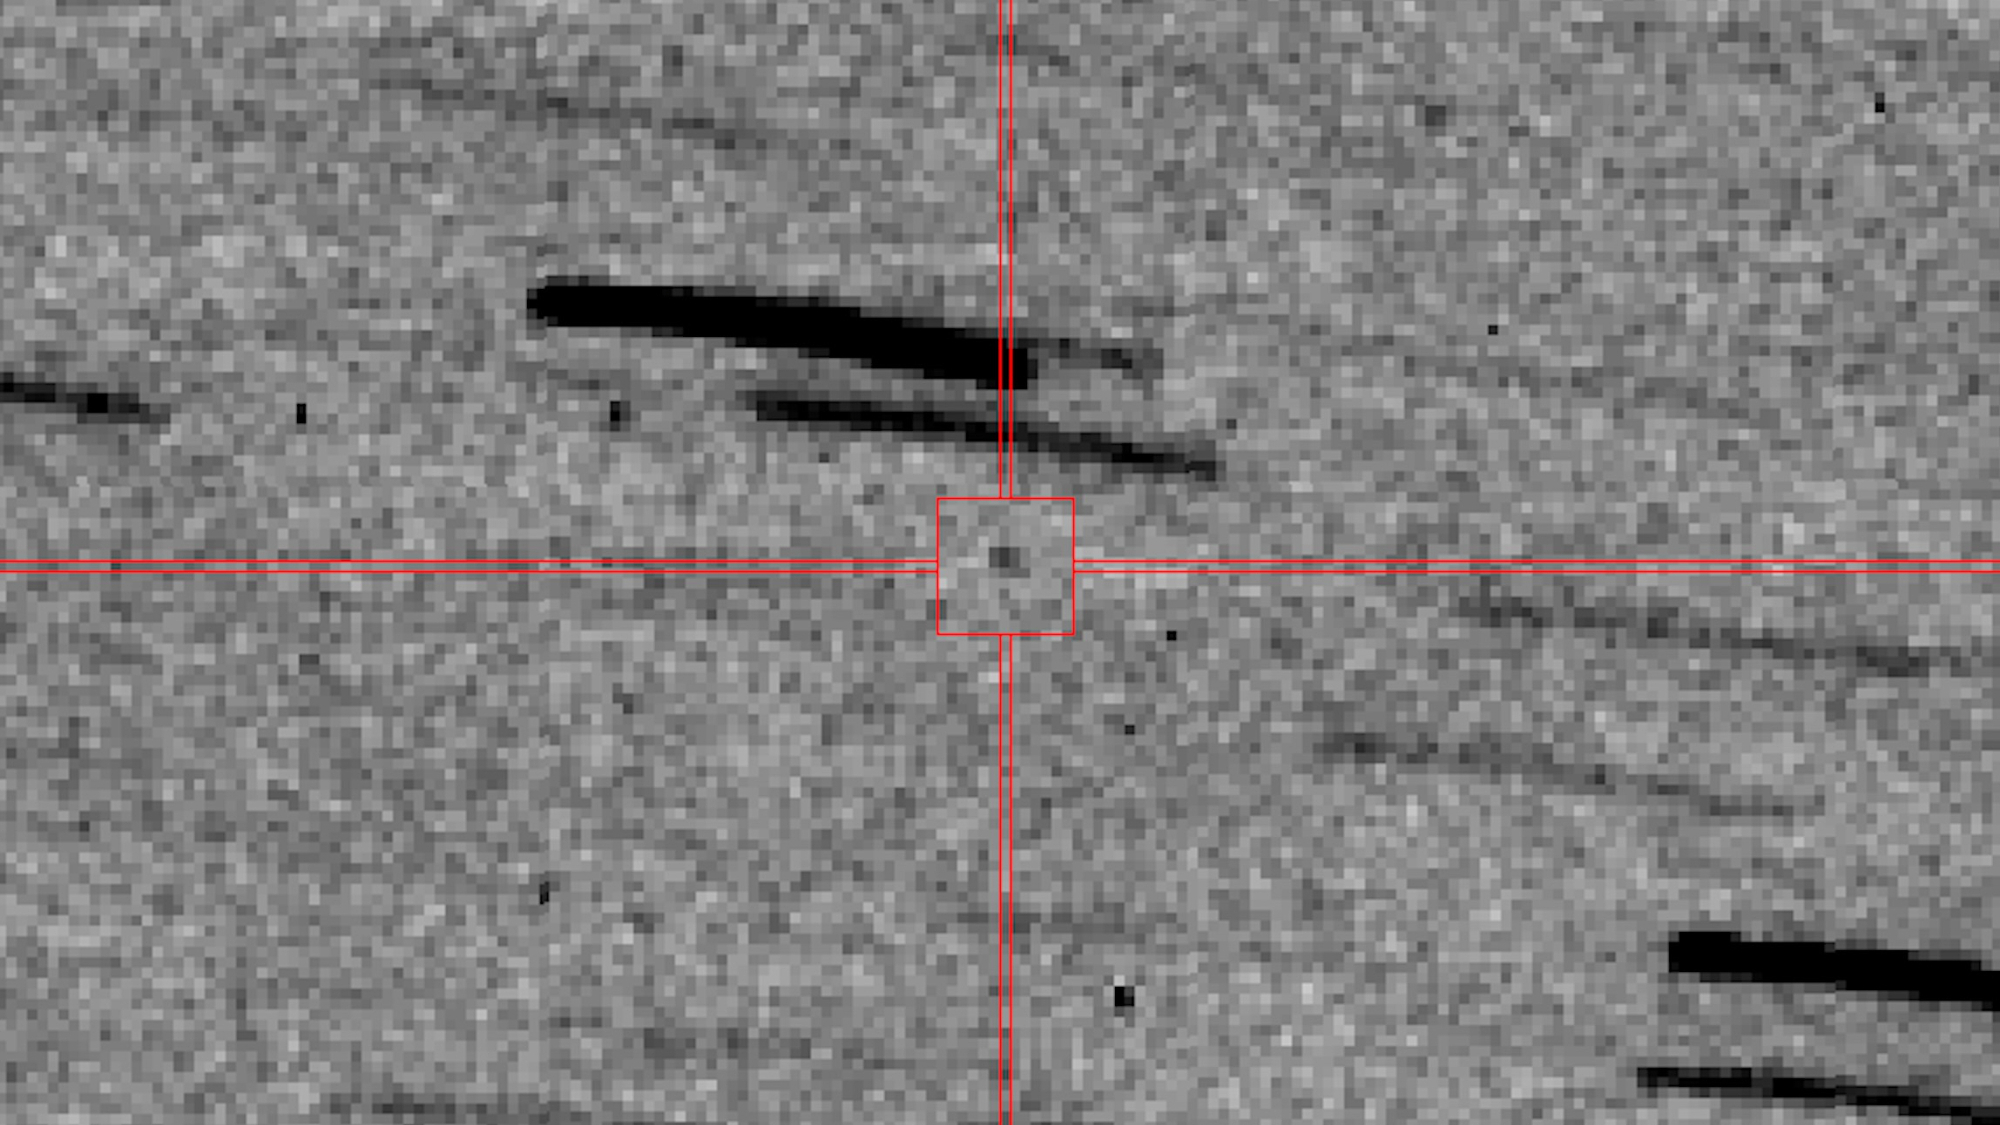  Telescope spots NASA's OSIRIS-REx probe as it brings asteroid samples to Earth (photo) 